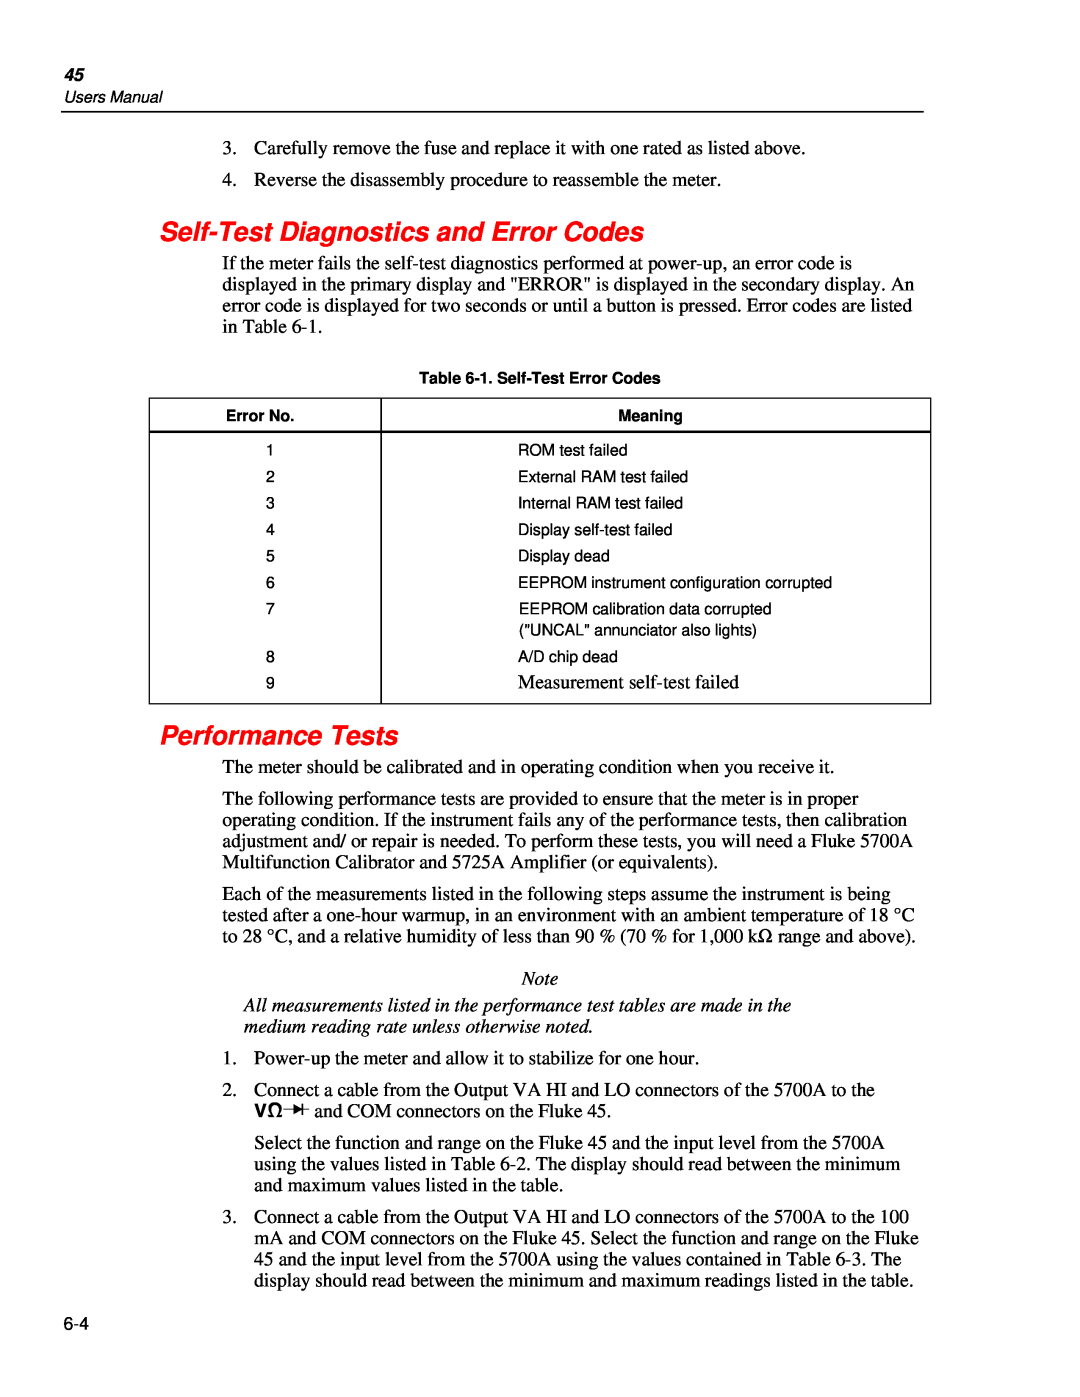 Fluke 45 user manual Self-TestDiagnostics and Error Codes, Performance Tests 